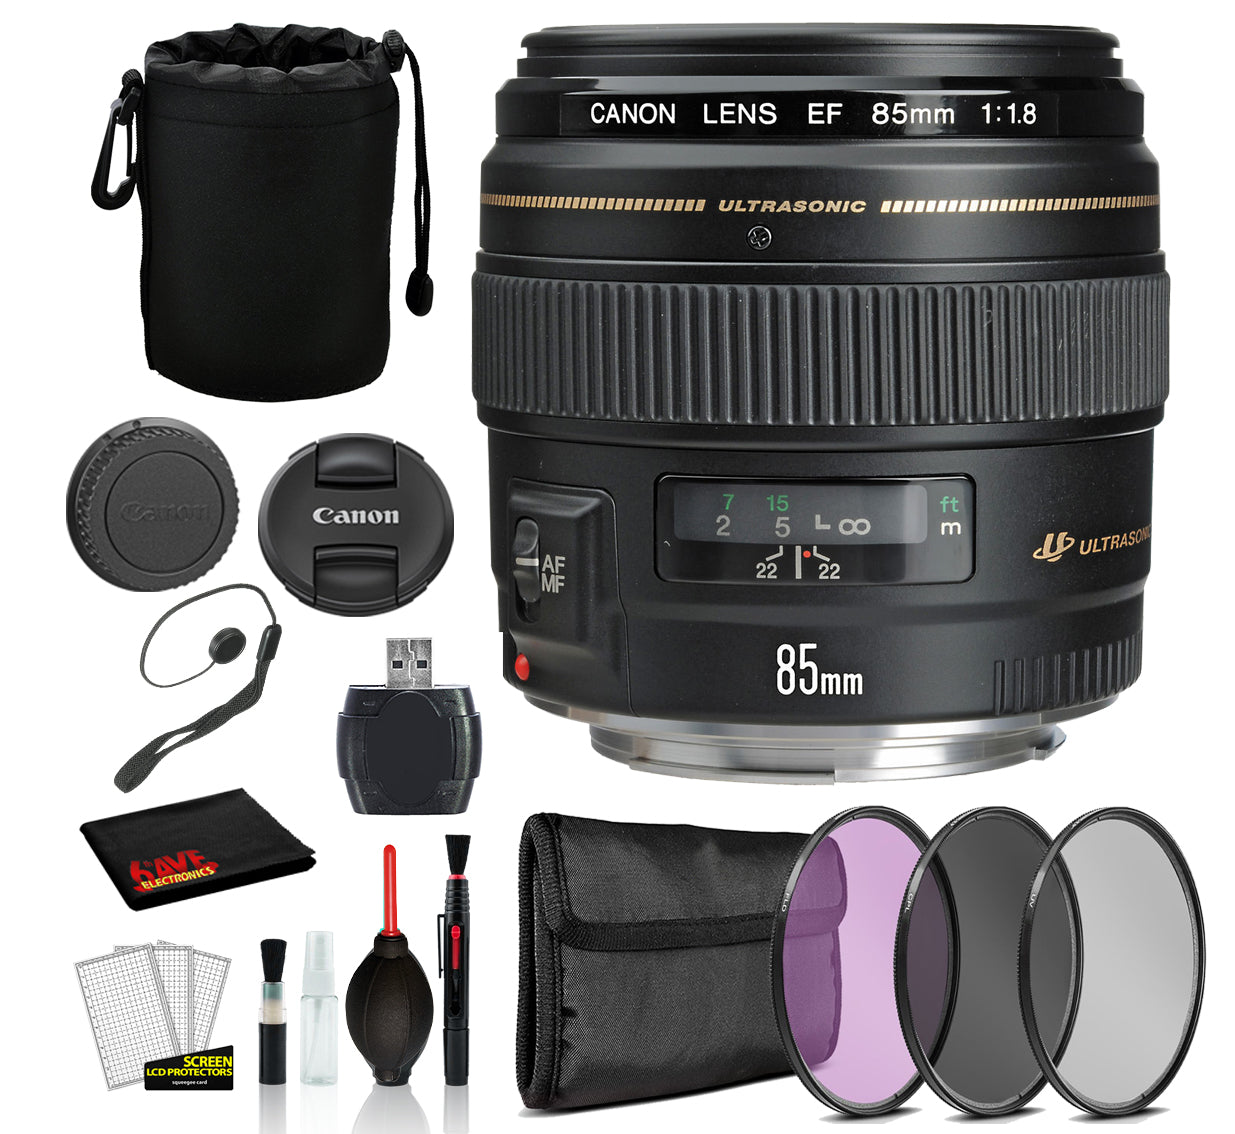 Canon EF 85mm f/1.8 USM Lens (2519A003) Lens with Bundle  includes 3pc Filter Kit (UV, CPL, FLD) + Lens Pouch + More